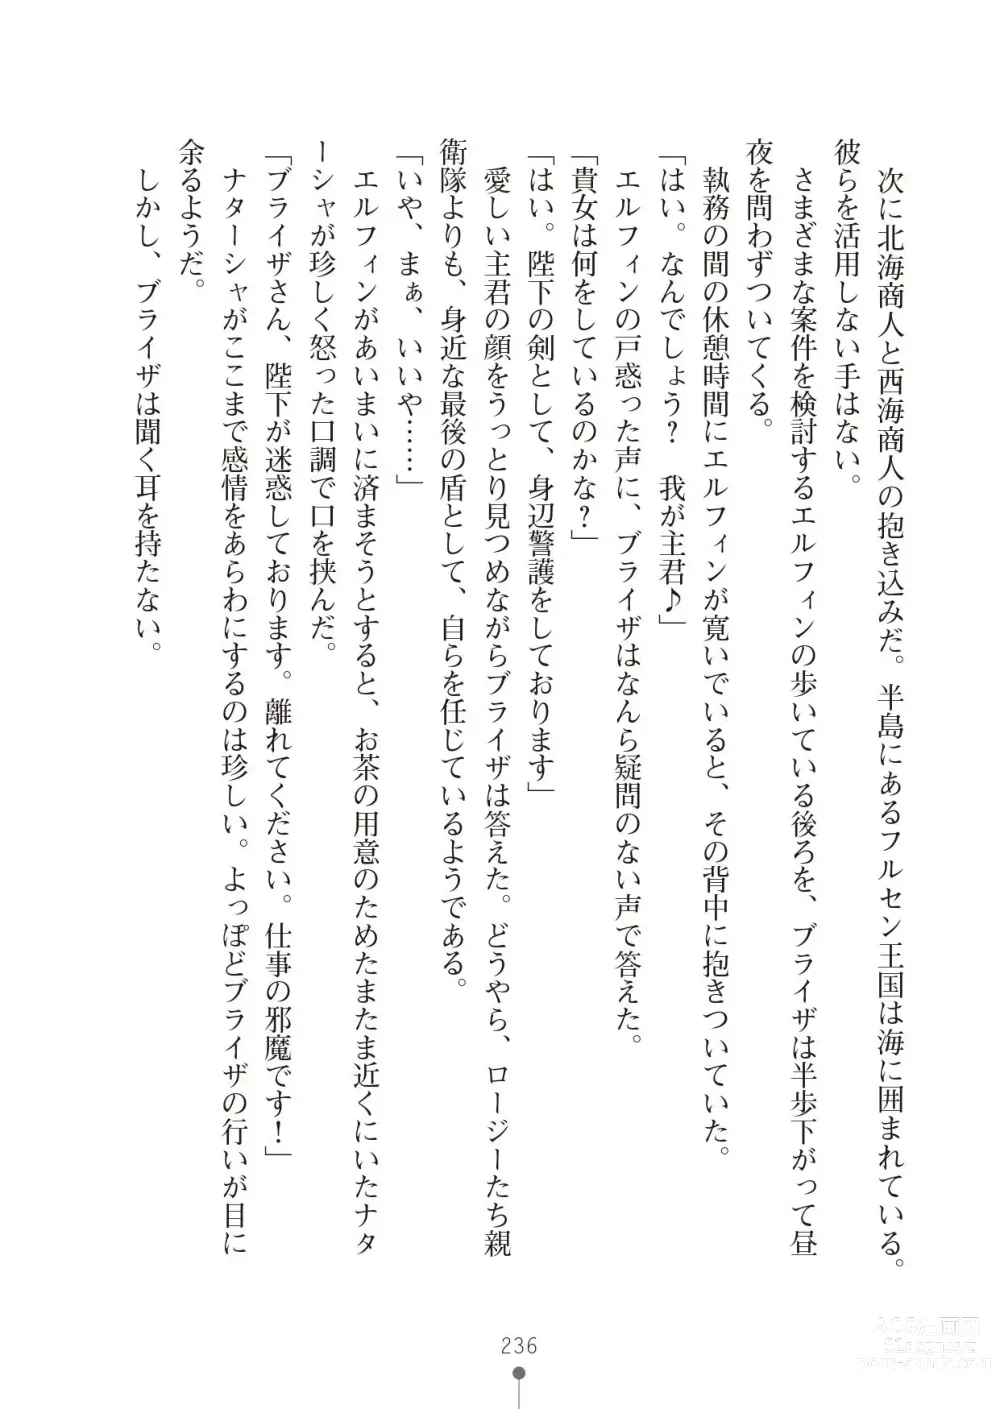 Page 236 of manga Harem Resistance 2